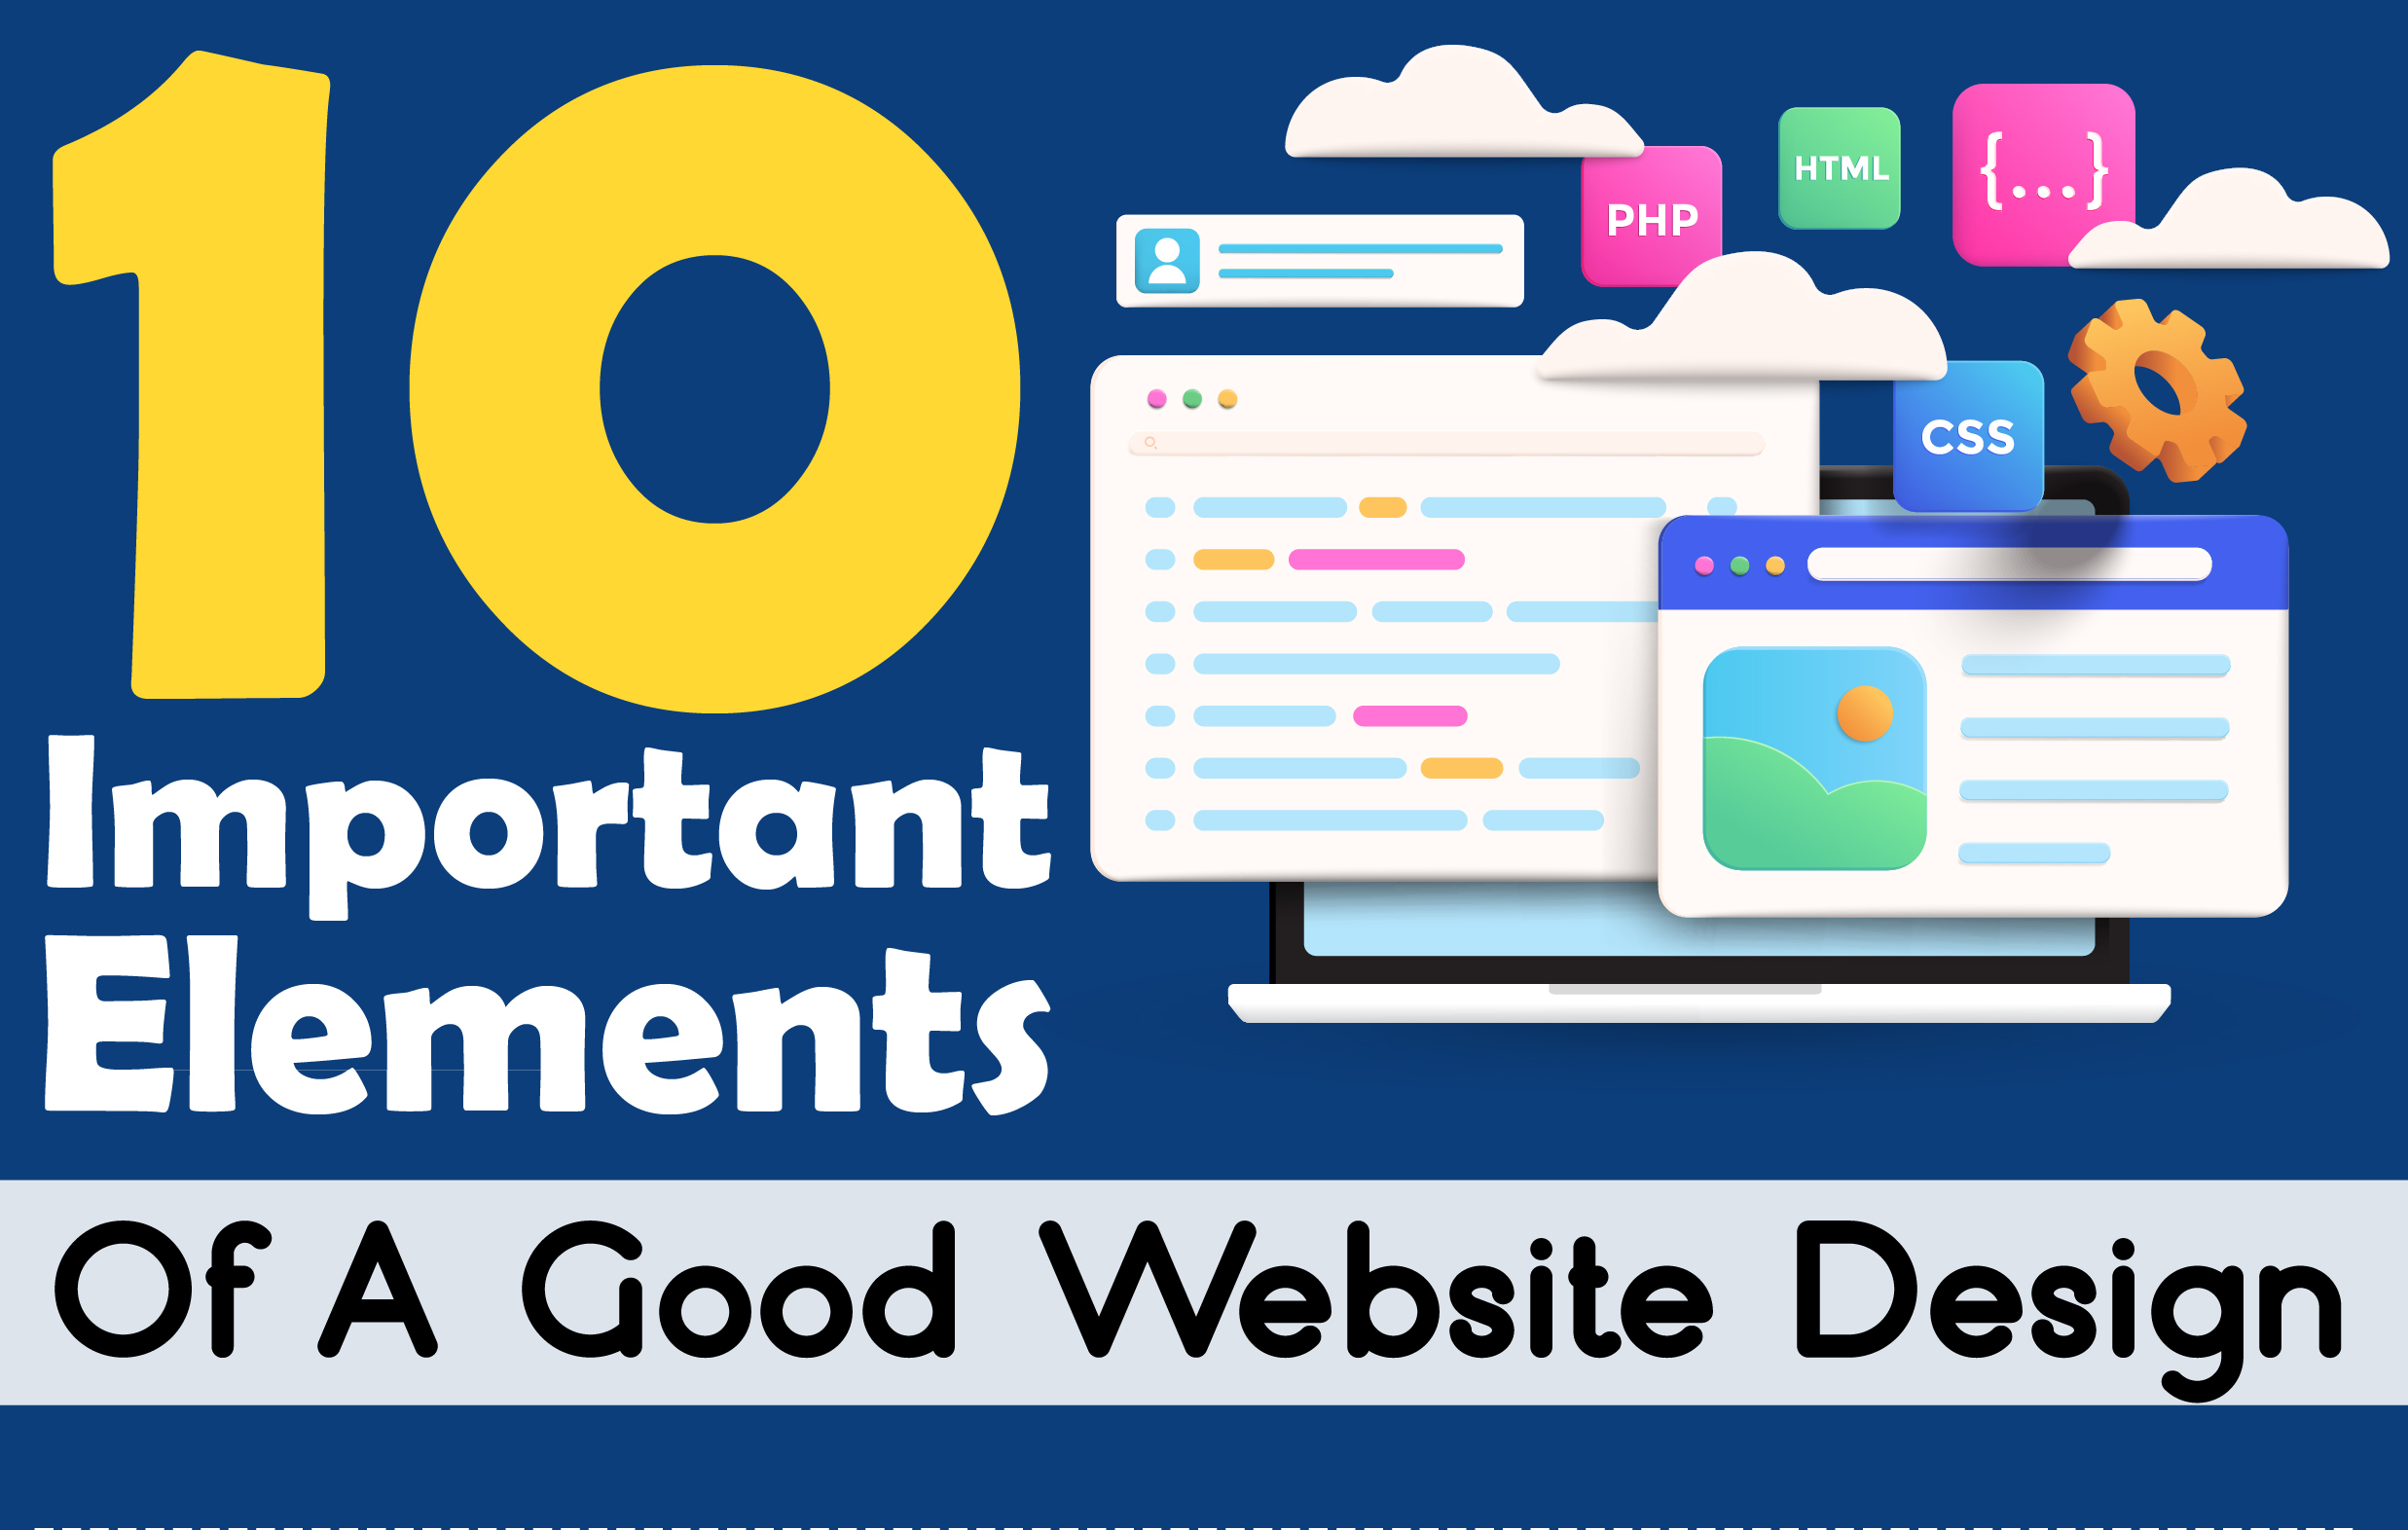 10 Important Elements of A Good Website Design